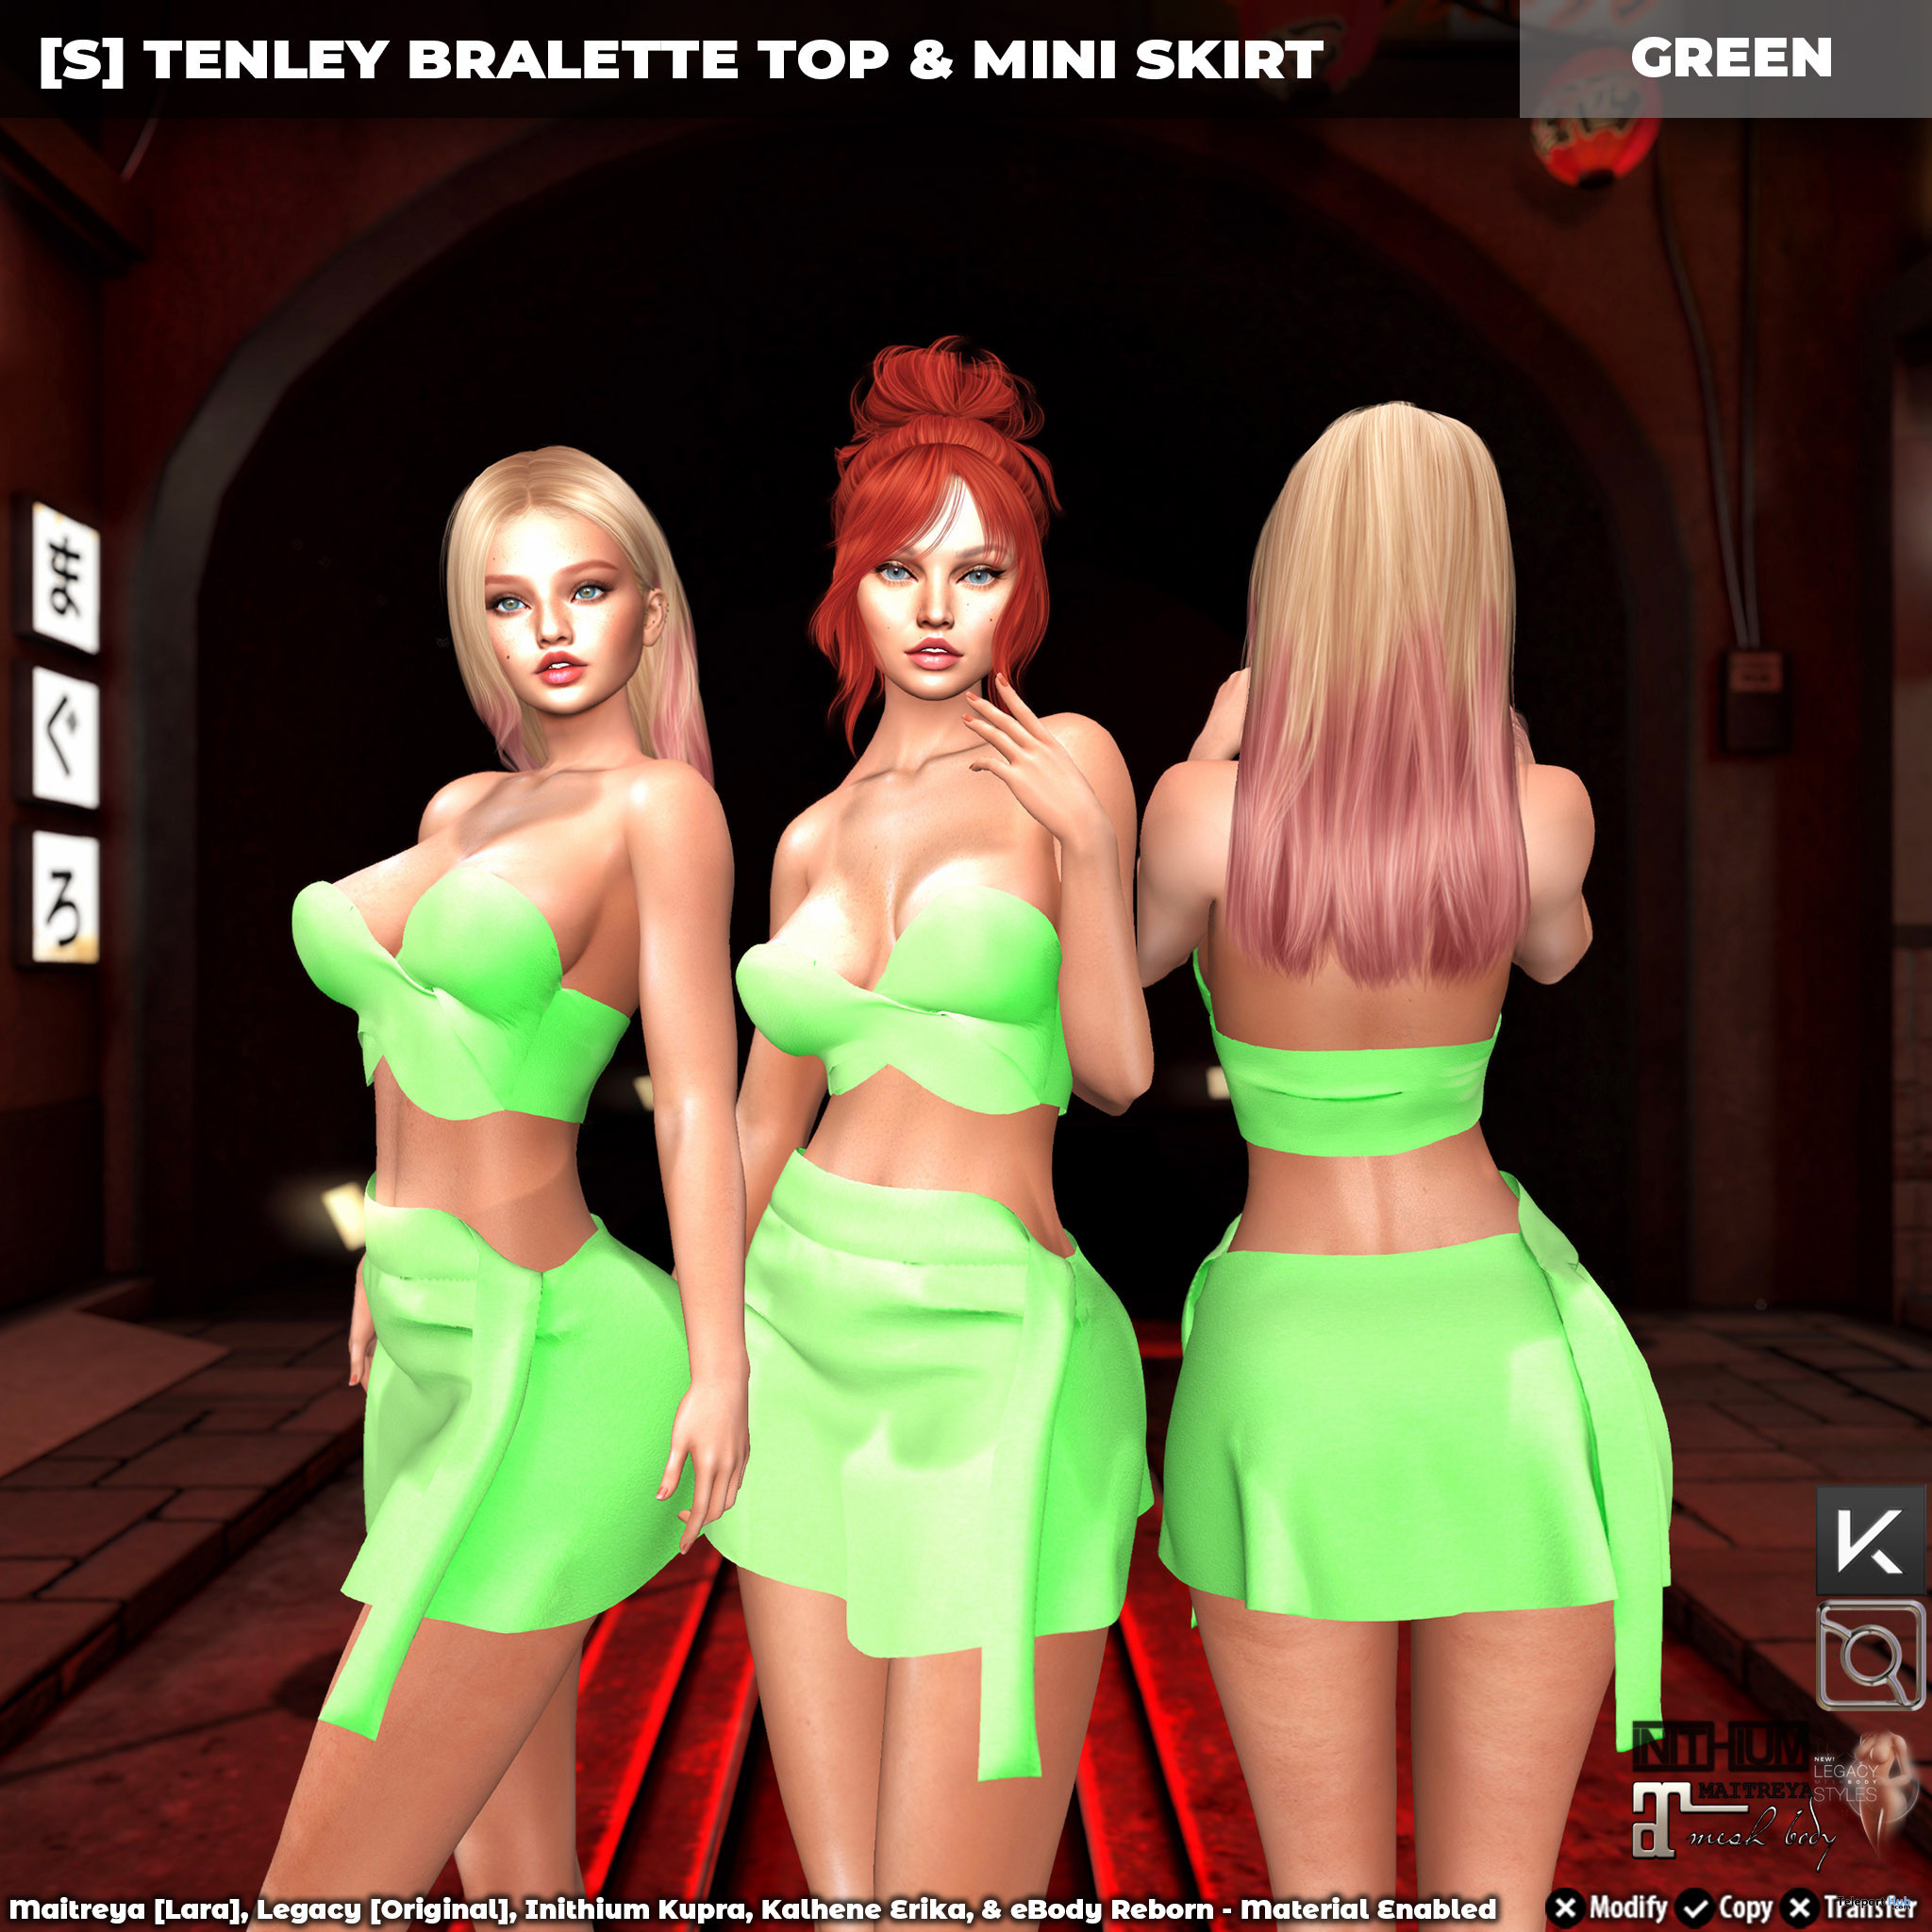 New Release: [S] Tenley Bralette Top & Mini Skirt by [satus Inc] - Teleport Hub - teleporthub.com